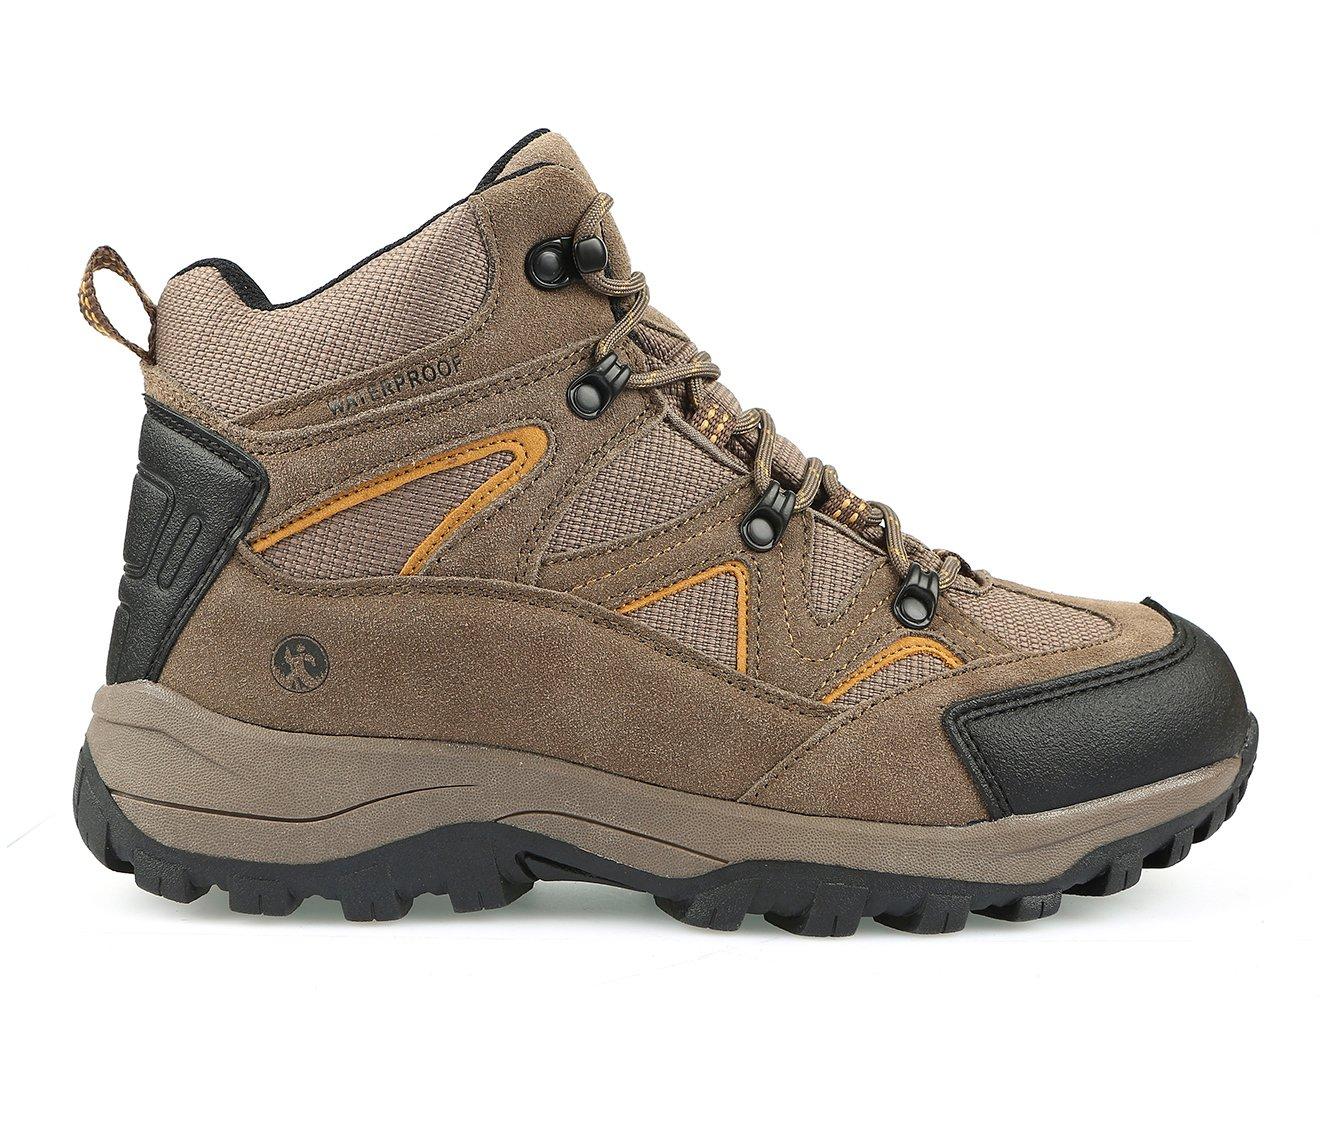 Men's Northside Snohomish Mid Hiking Boots